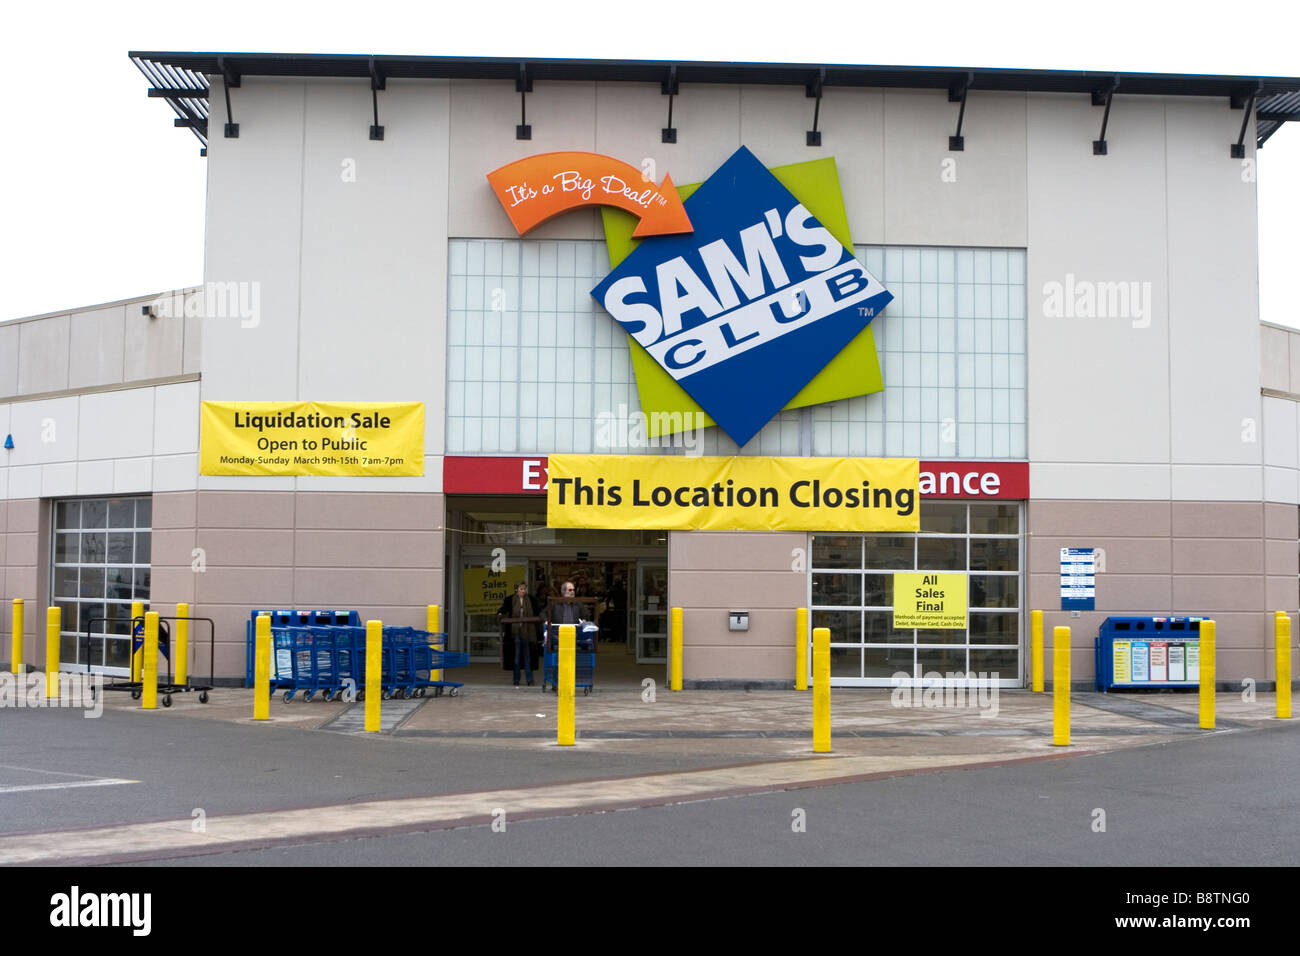 Sams club store closing fotografías e imágenes de alta resolución - Alamy